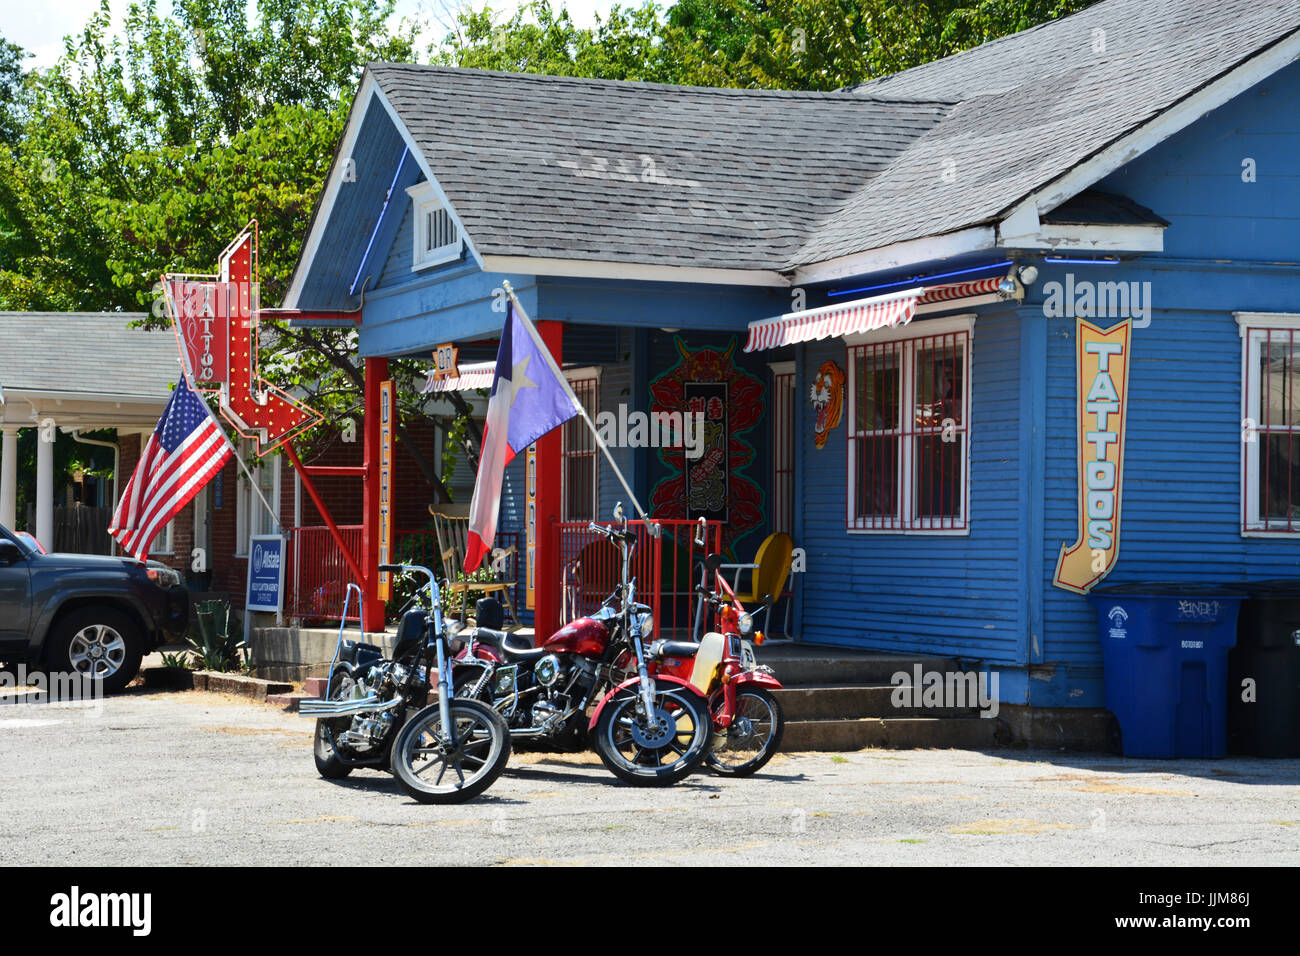 A neighborhood tattoo parlor in the Lower Greenville neighborhood of Dallas Texas. Stock Photo